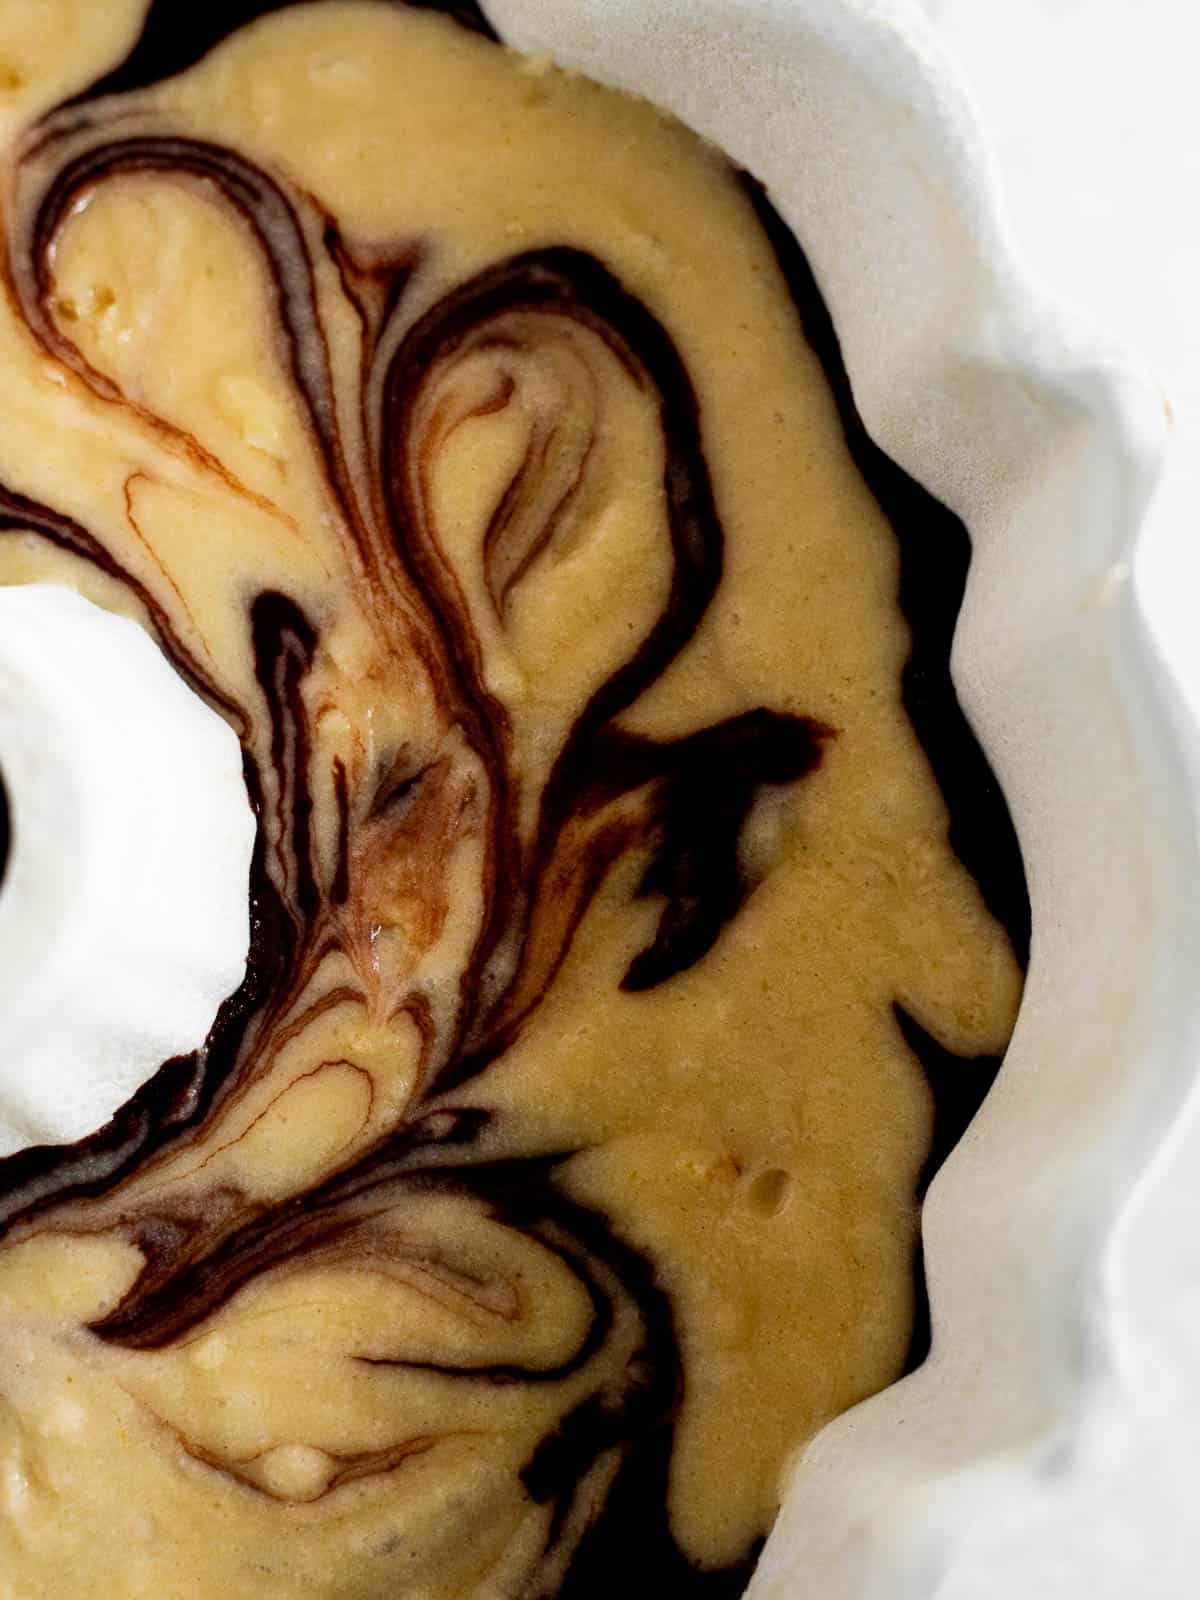 Vanilla and chocolate cake batter swirled in a white bundt pan.